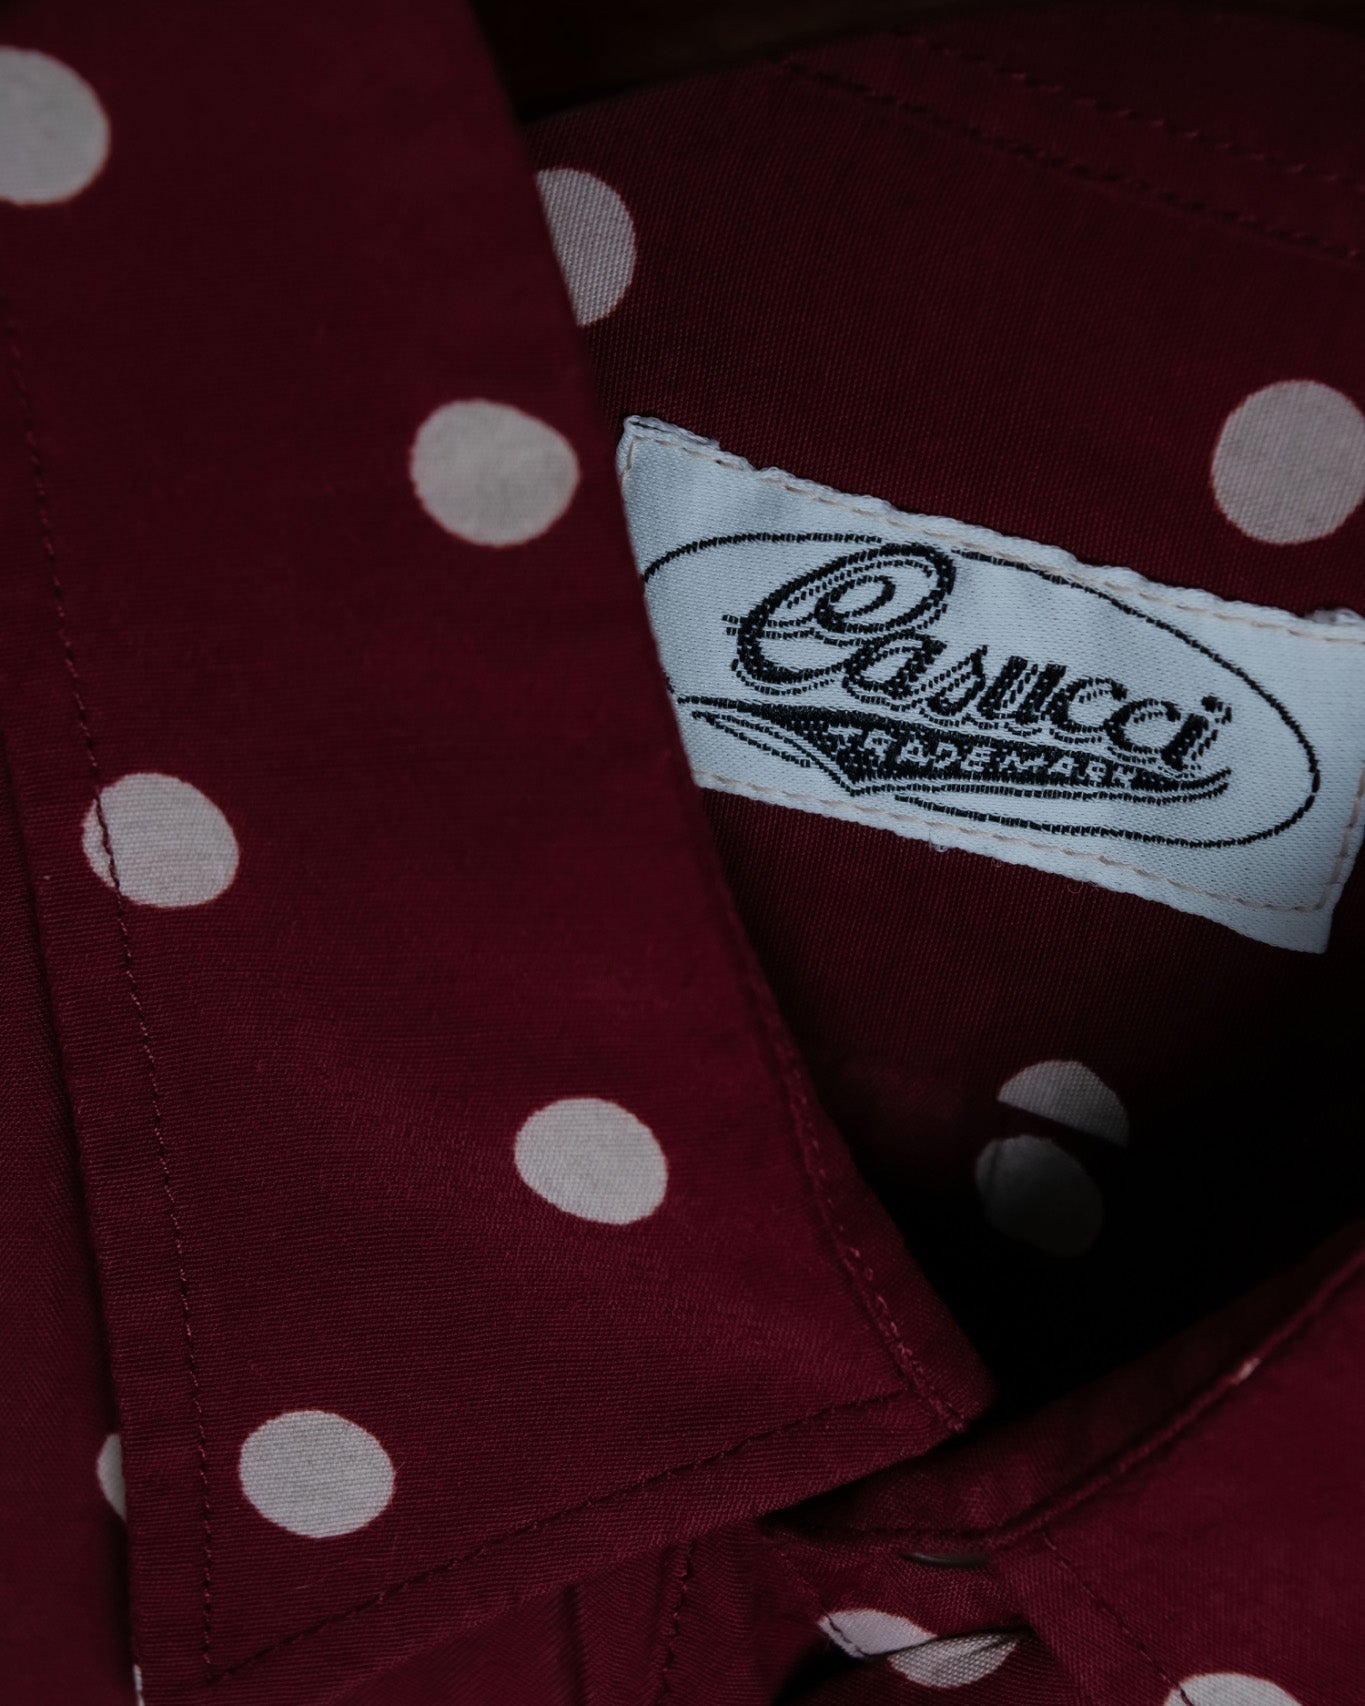 Vintage red polka dot shirt